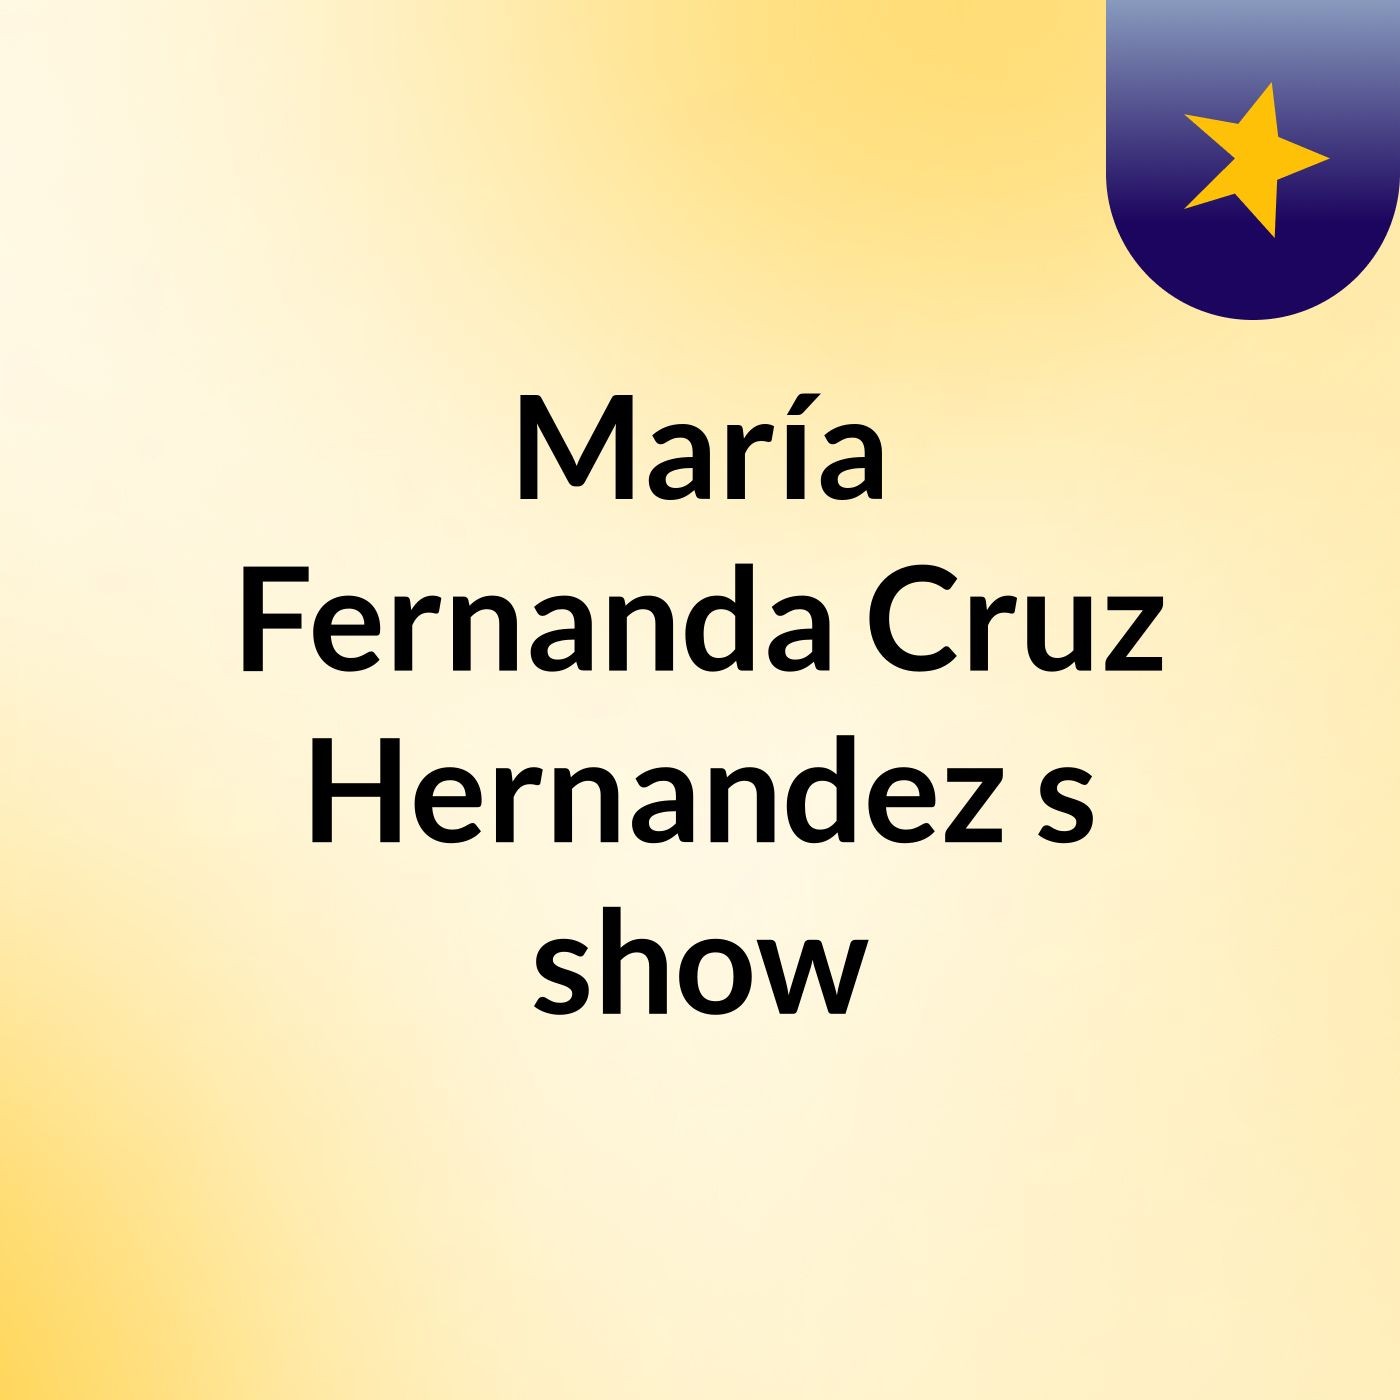 María Fernanda Cruz Hernandez's show